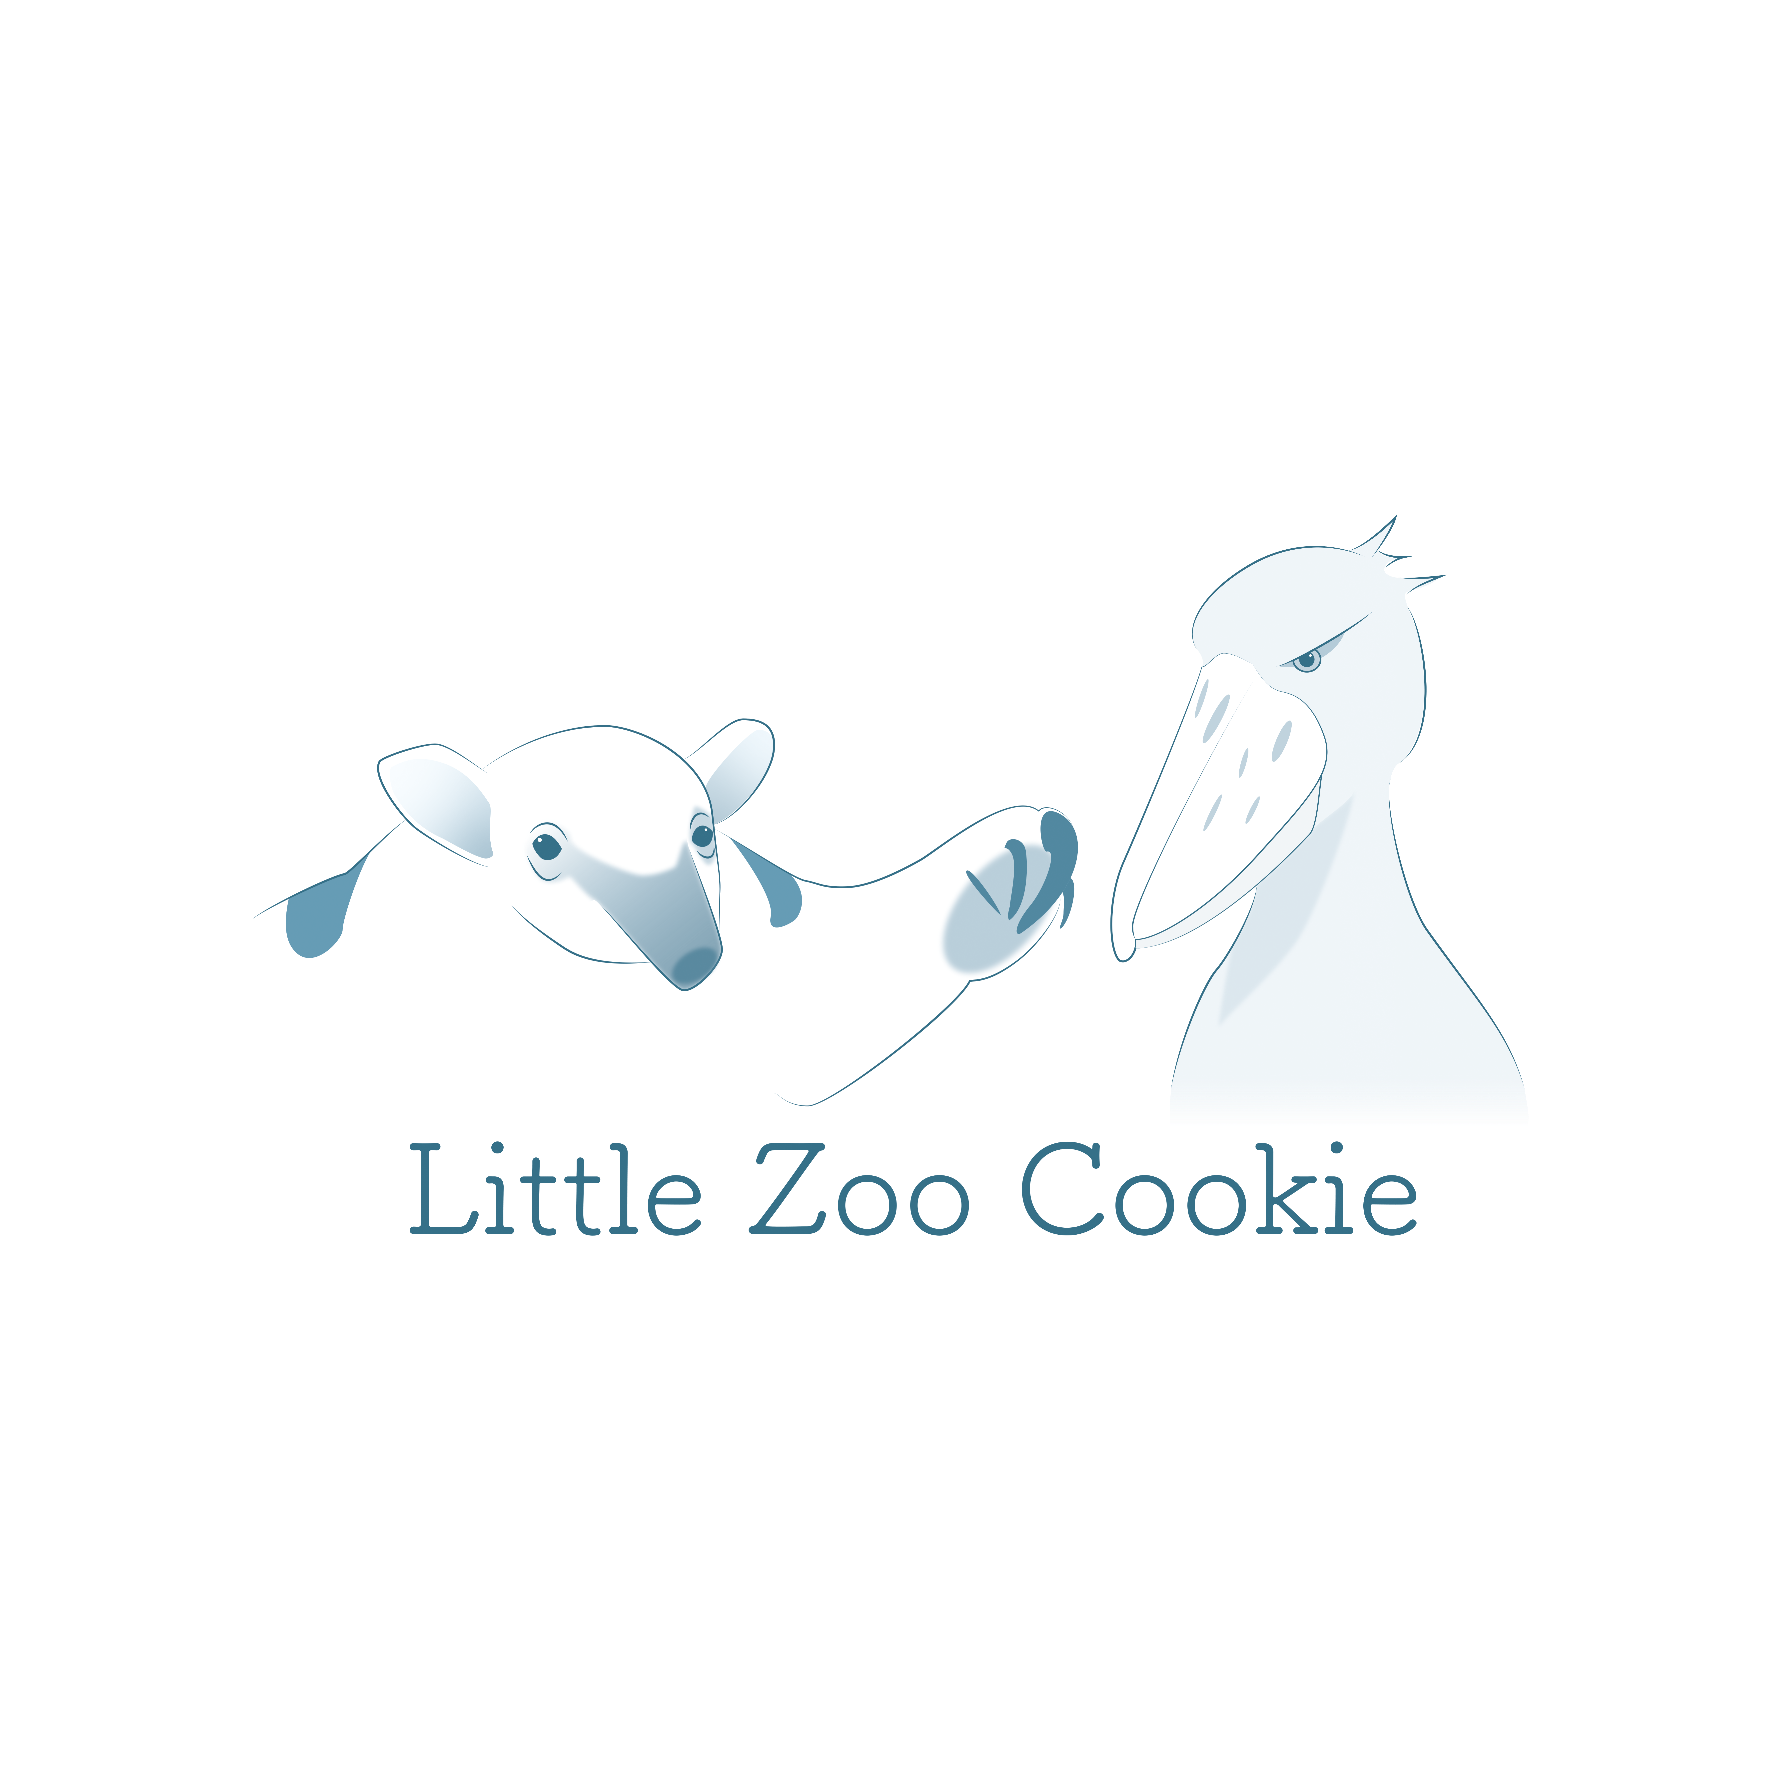 Little Zoo Cookie